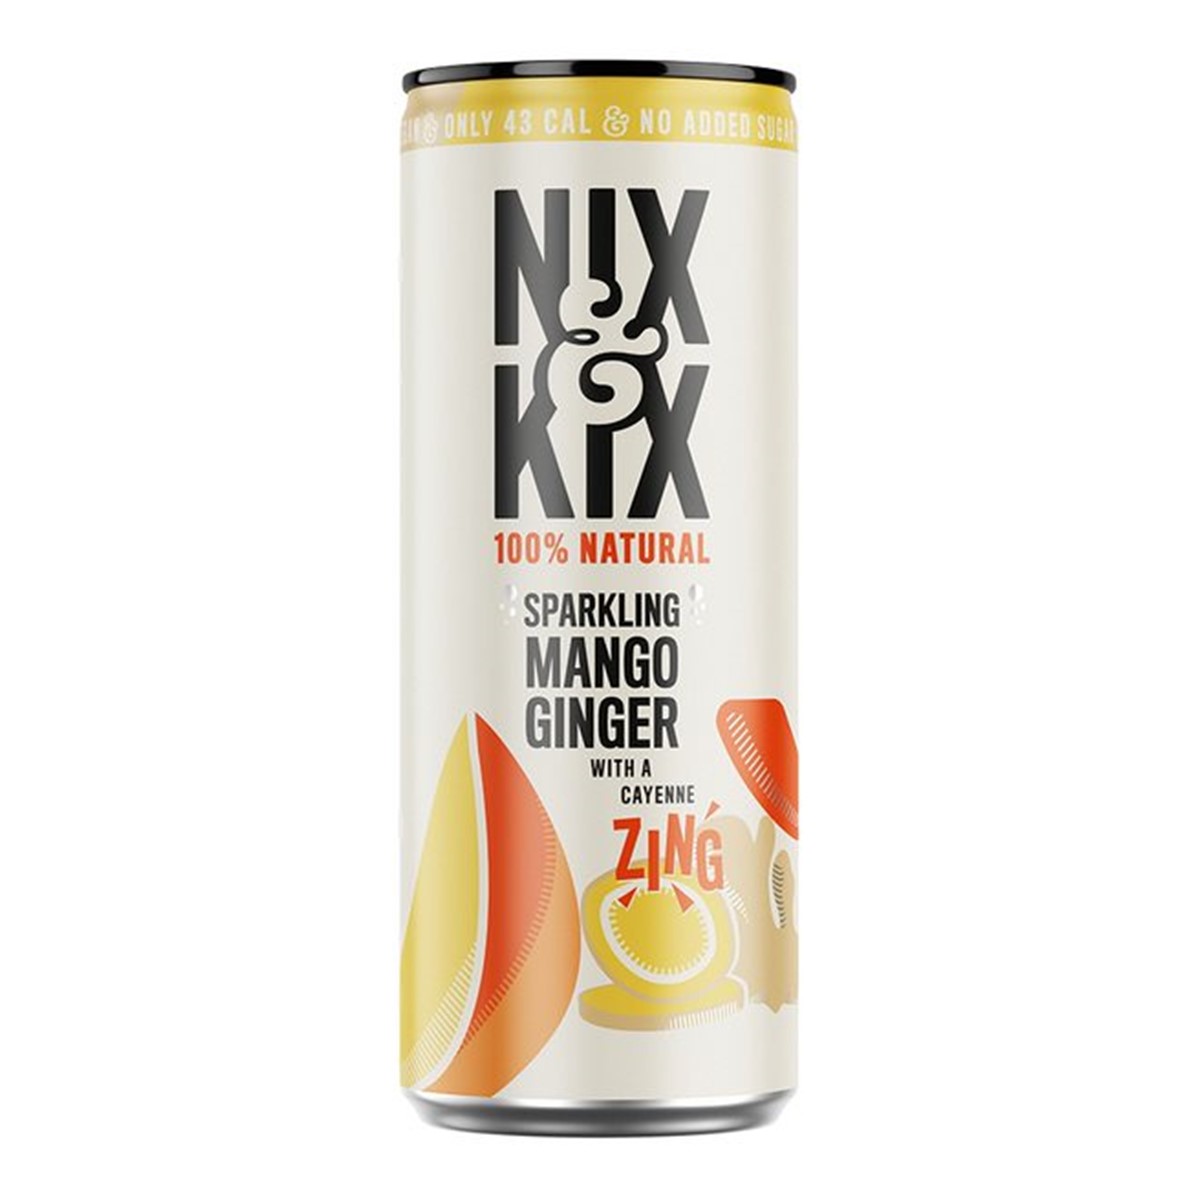 Nix & Kix Mango Ginger - 24x250ml cans